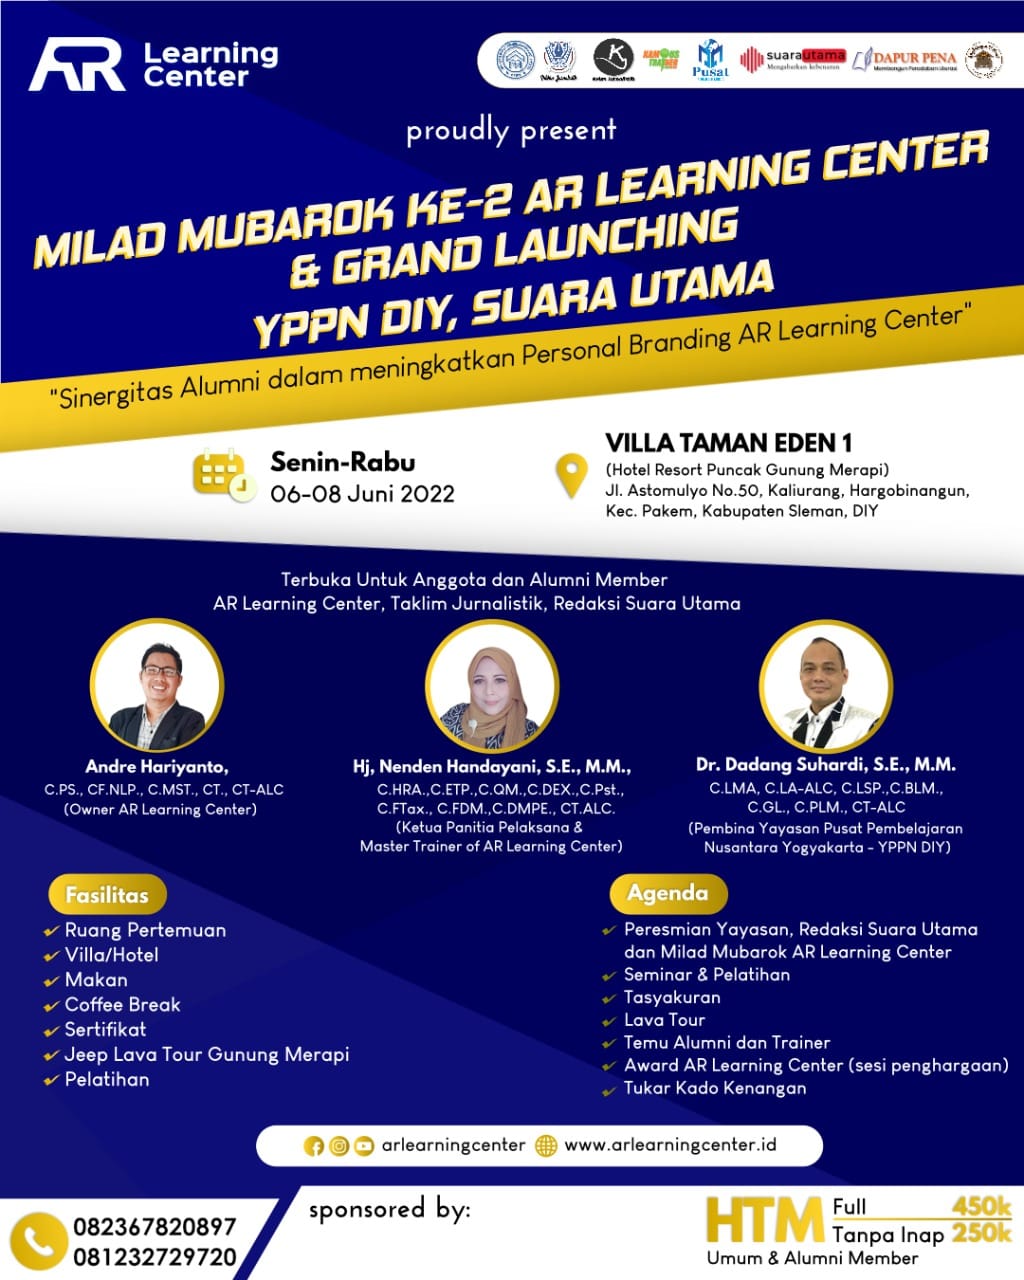 Pendaftaran Silaturahmi Alumni AR Learning Center Dibuka, Invest 450K Incluade Hotel dan Konsumsi 2 Malam